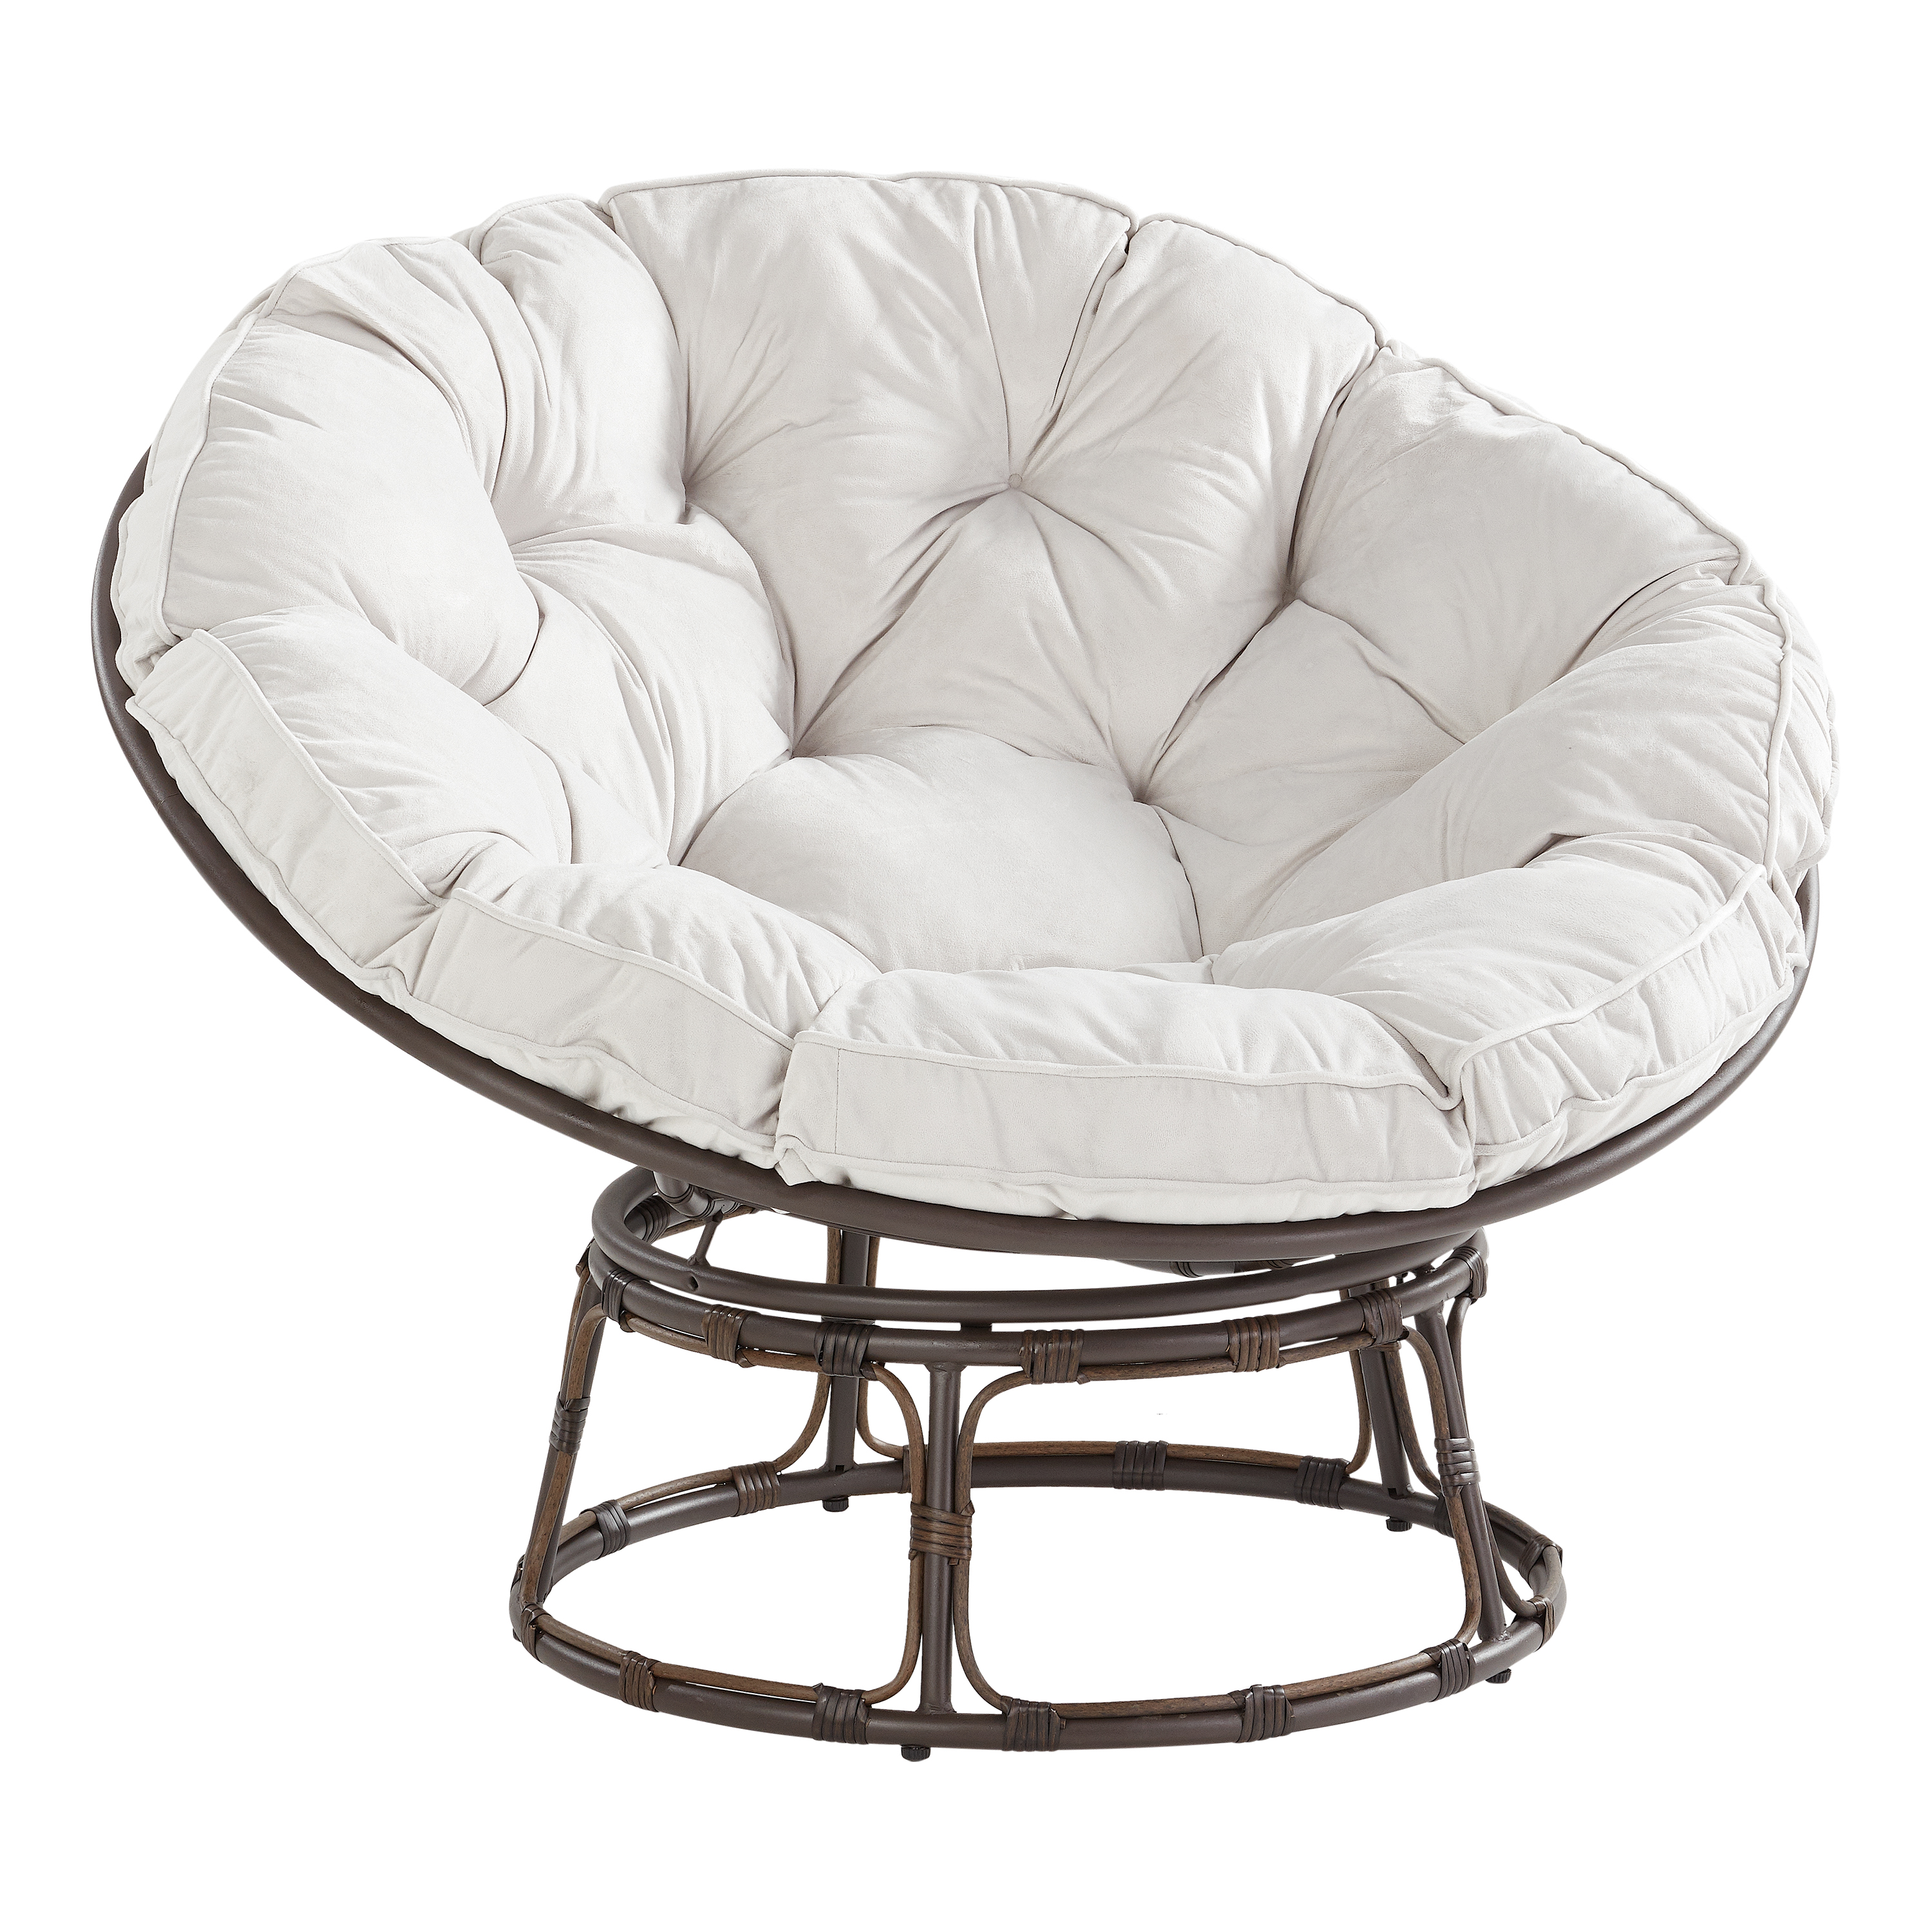 Buy Better Homes Gardens Papasan Chair With Fabric Cushion